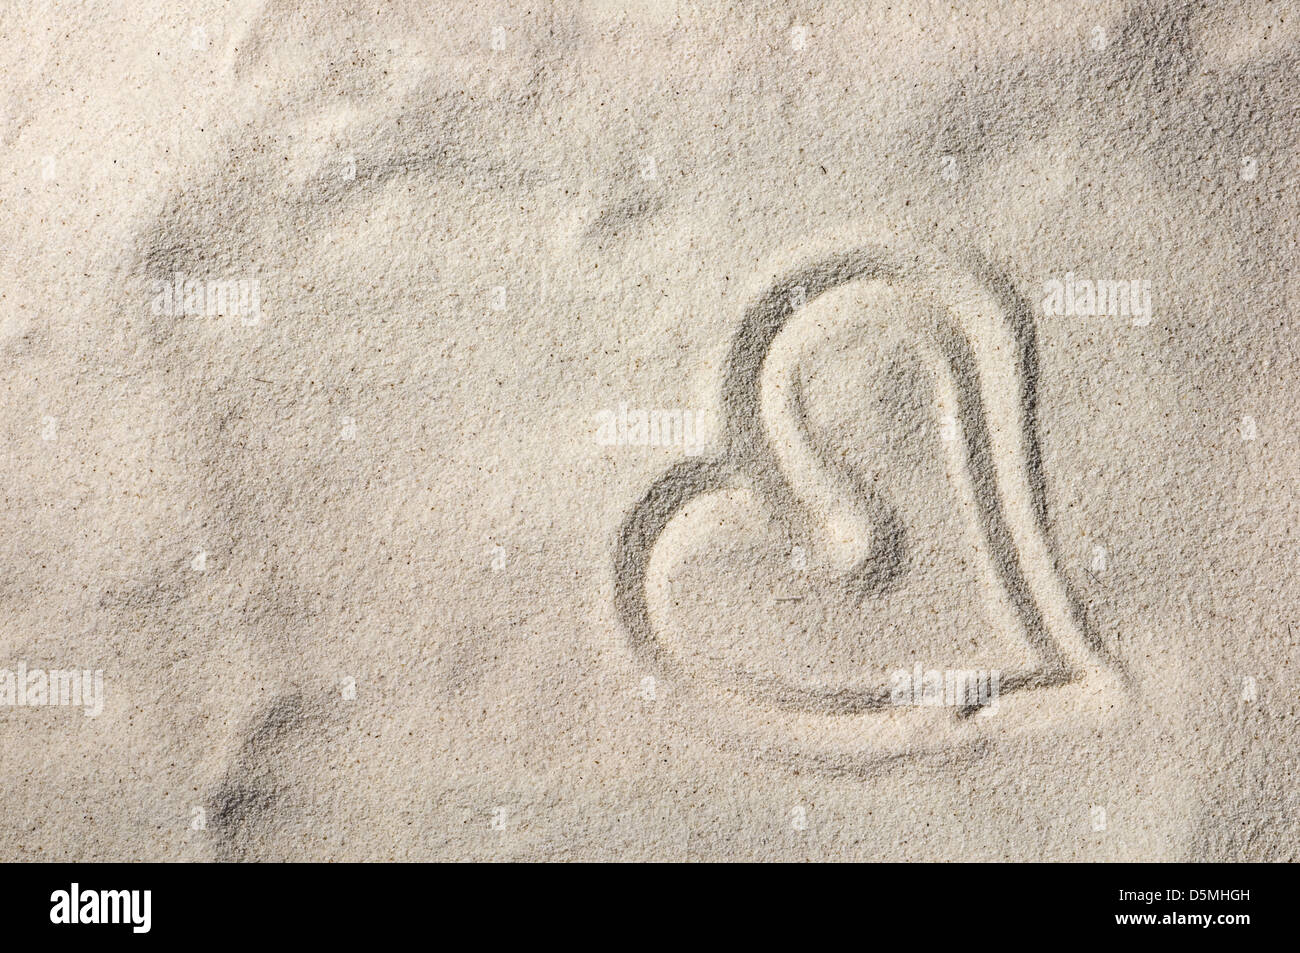 Herz auf Sand am Meeresstrand Stockfoto